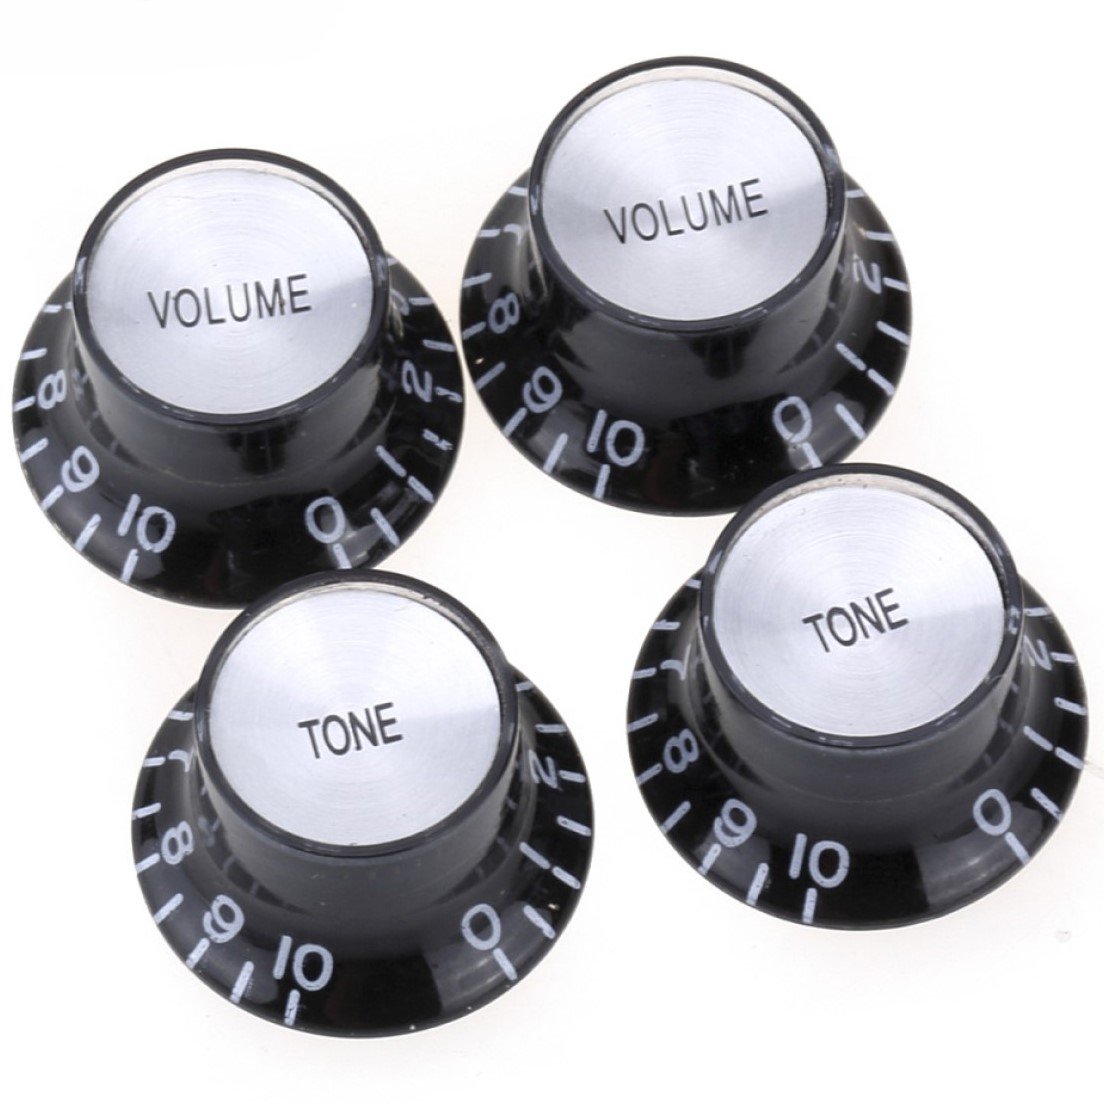 thumbnail 8 - Top Hat Speed Control Knobs Les Paul Volume Tone Knobs Metric Size Plastic